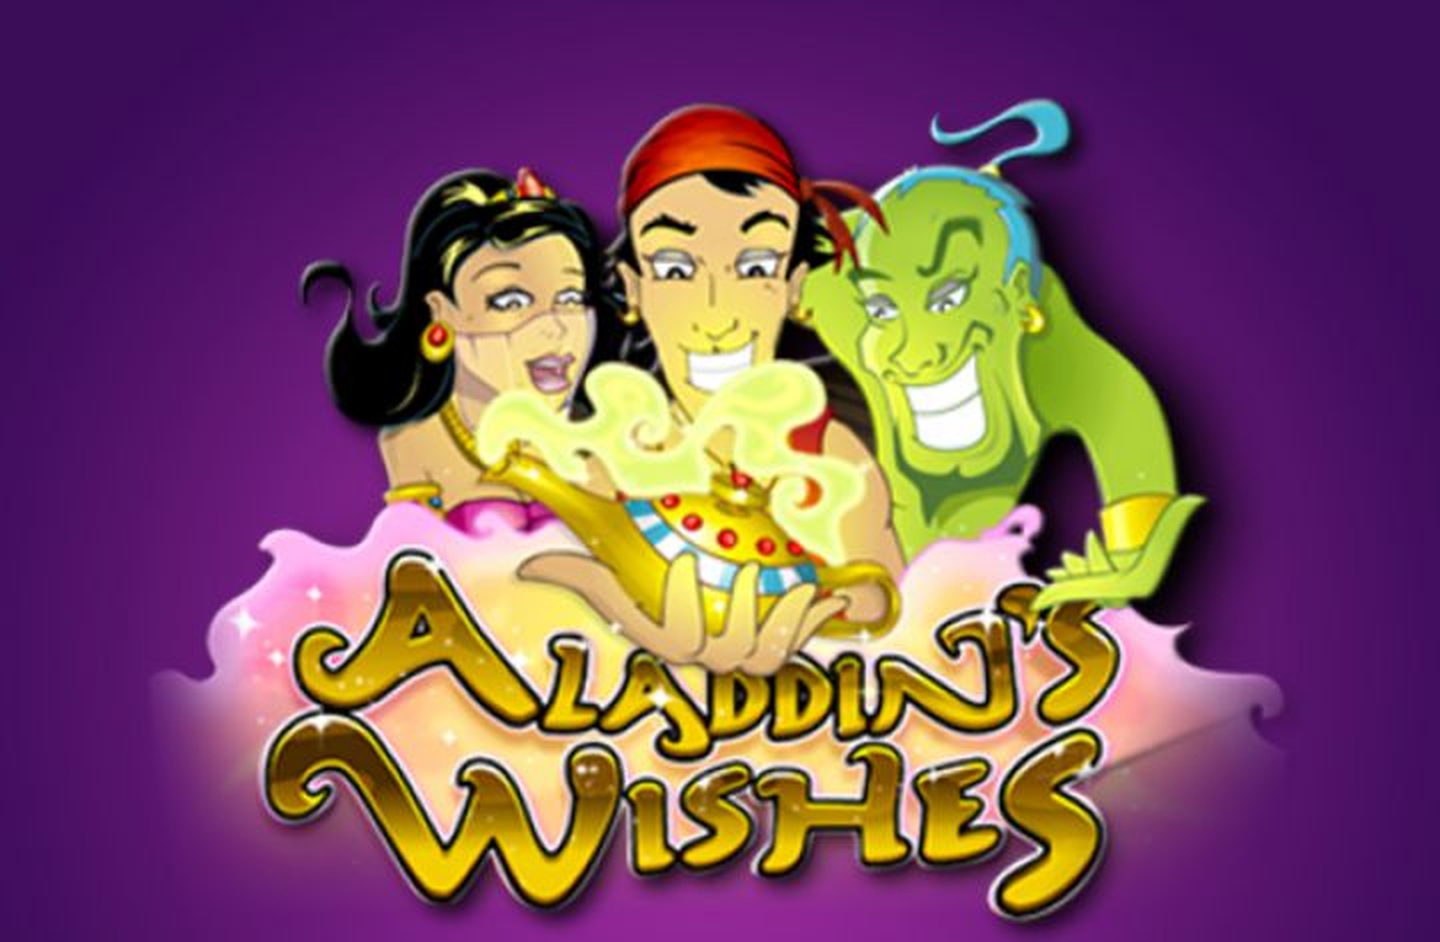 Aladdin's wishes demo